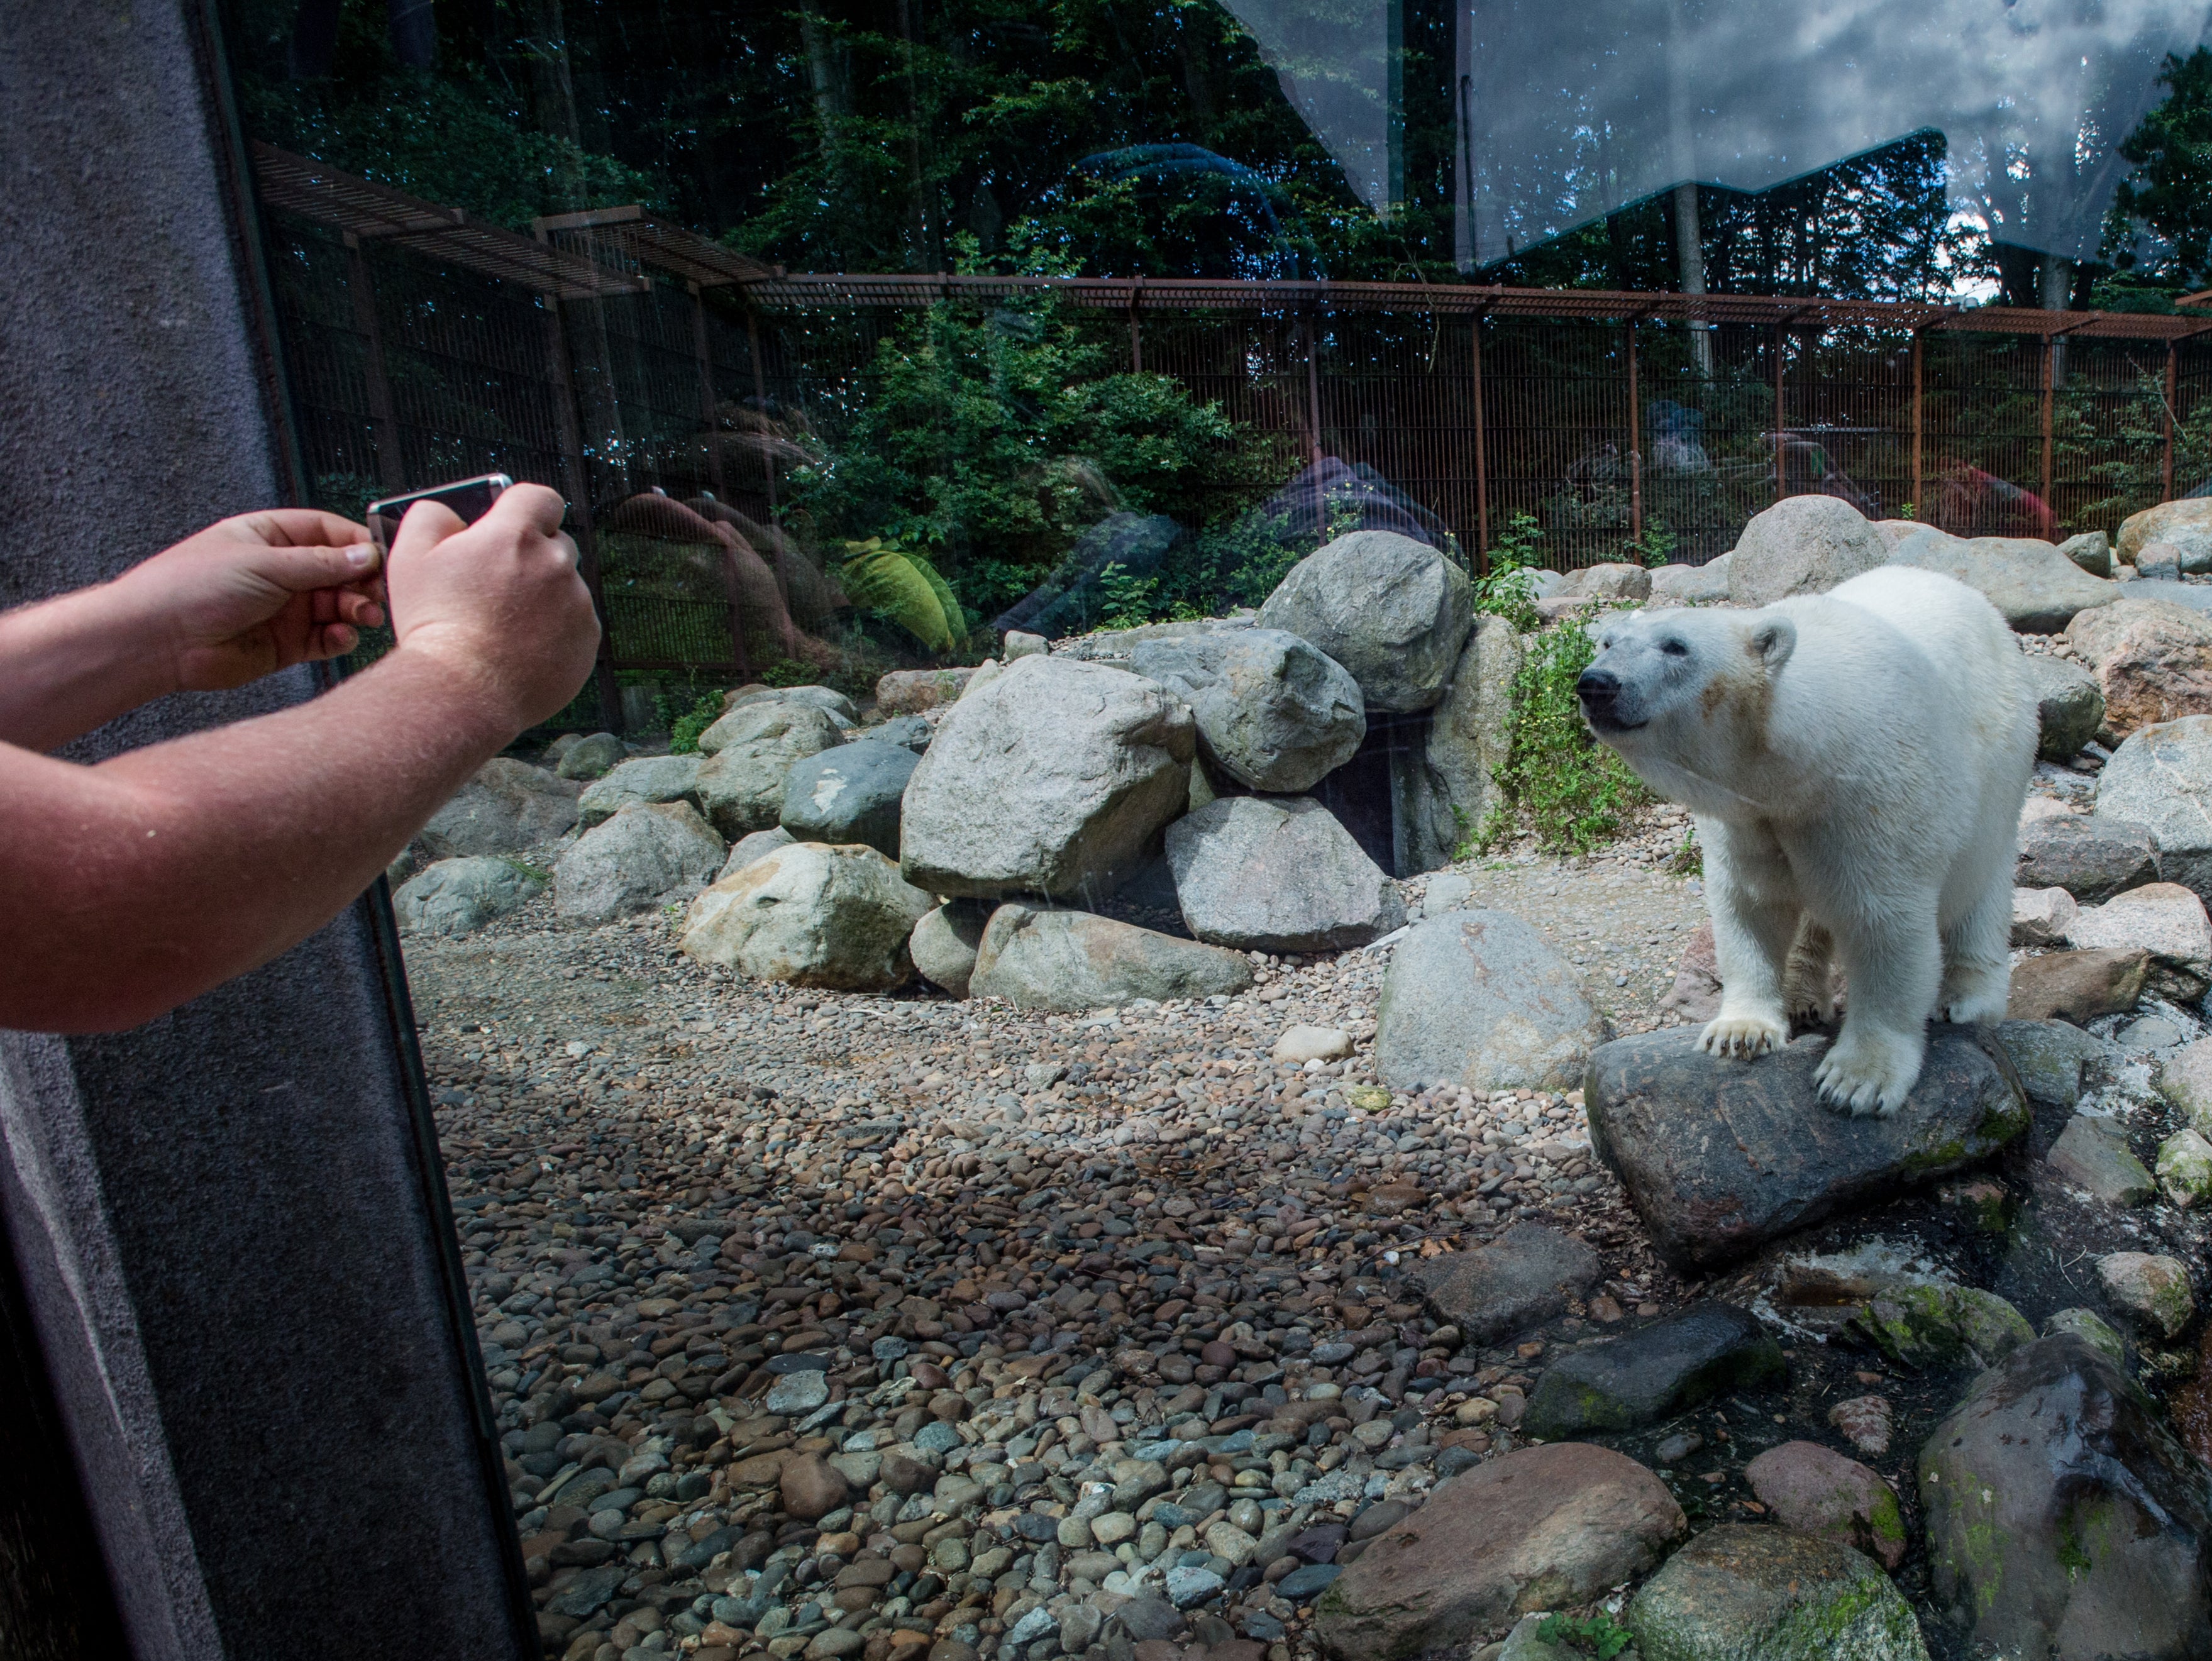 A polar bear in an enclosure in Denmark